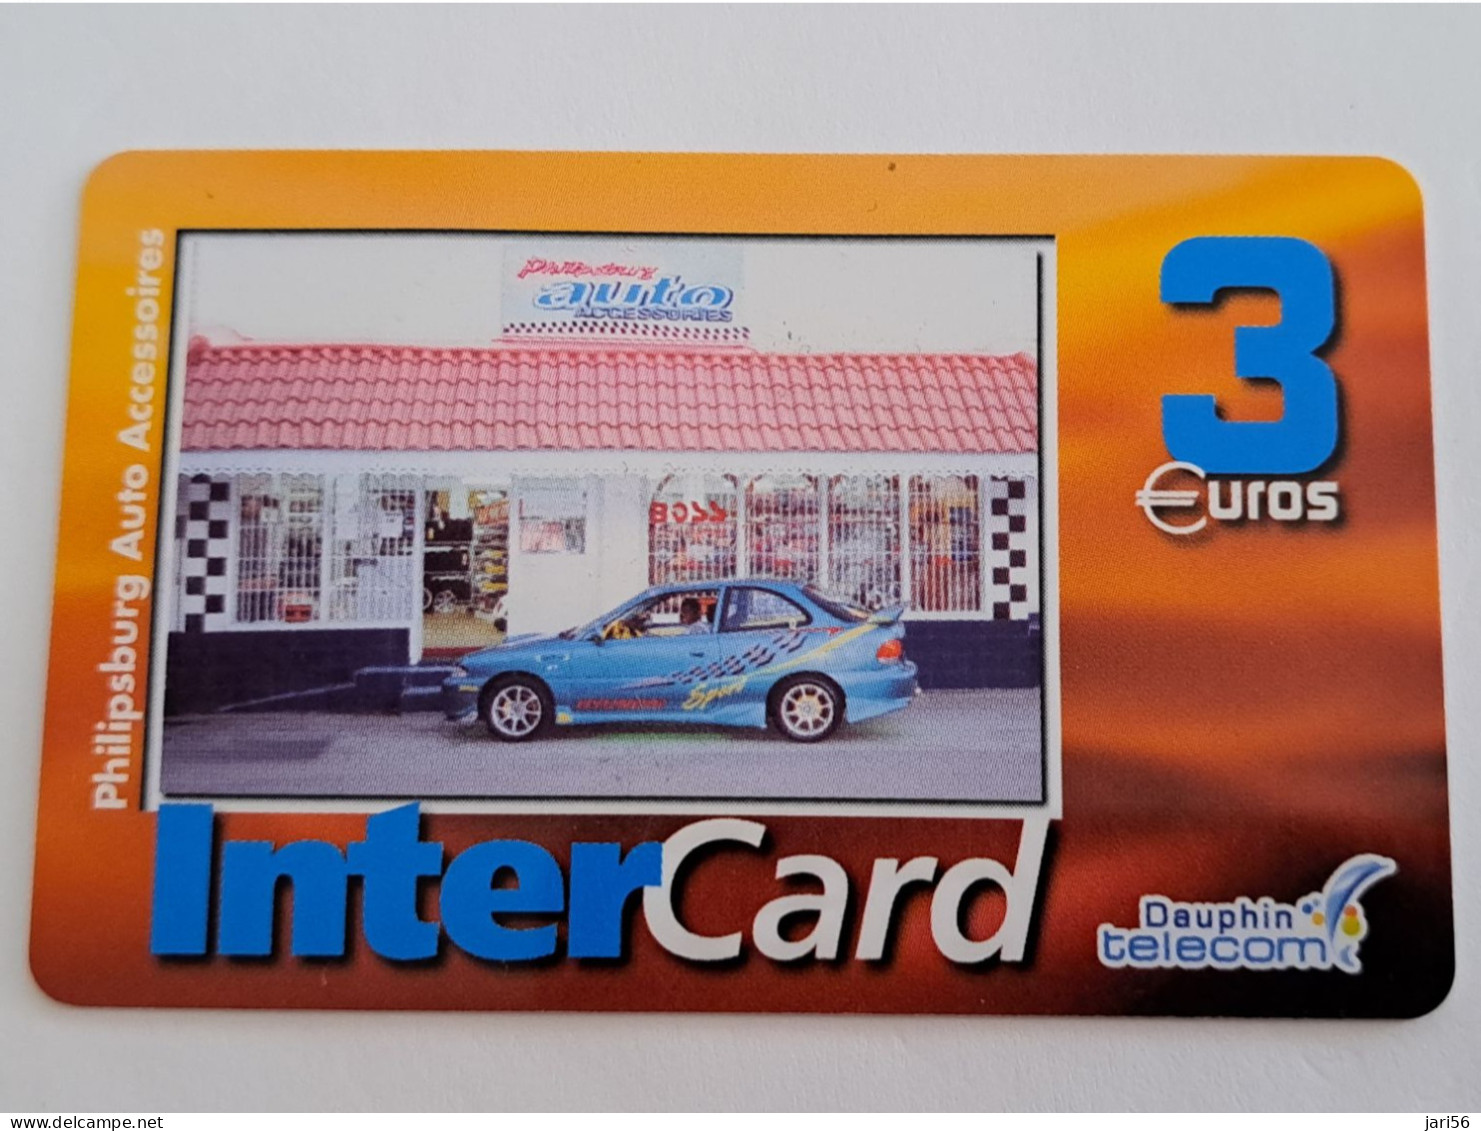 ST MARTIN / INTERCARD  3 EURO    PHILIPSBURG AUTO ACCESSOIRES          NO 146   Fine Used Card    ** 13717 ** - Antilles (Françaises)